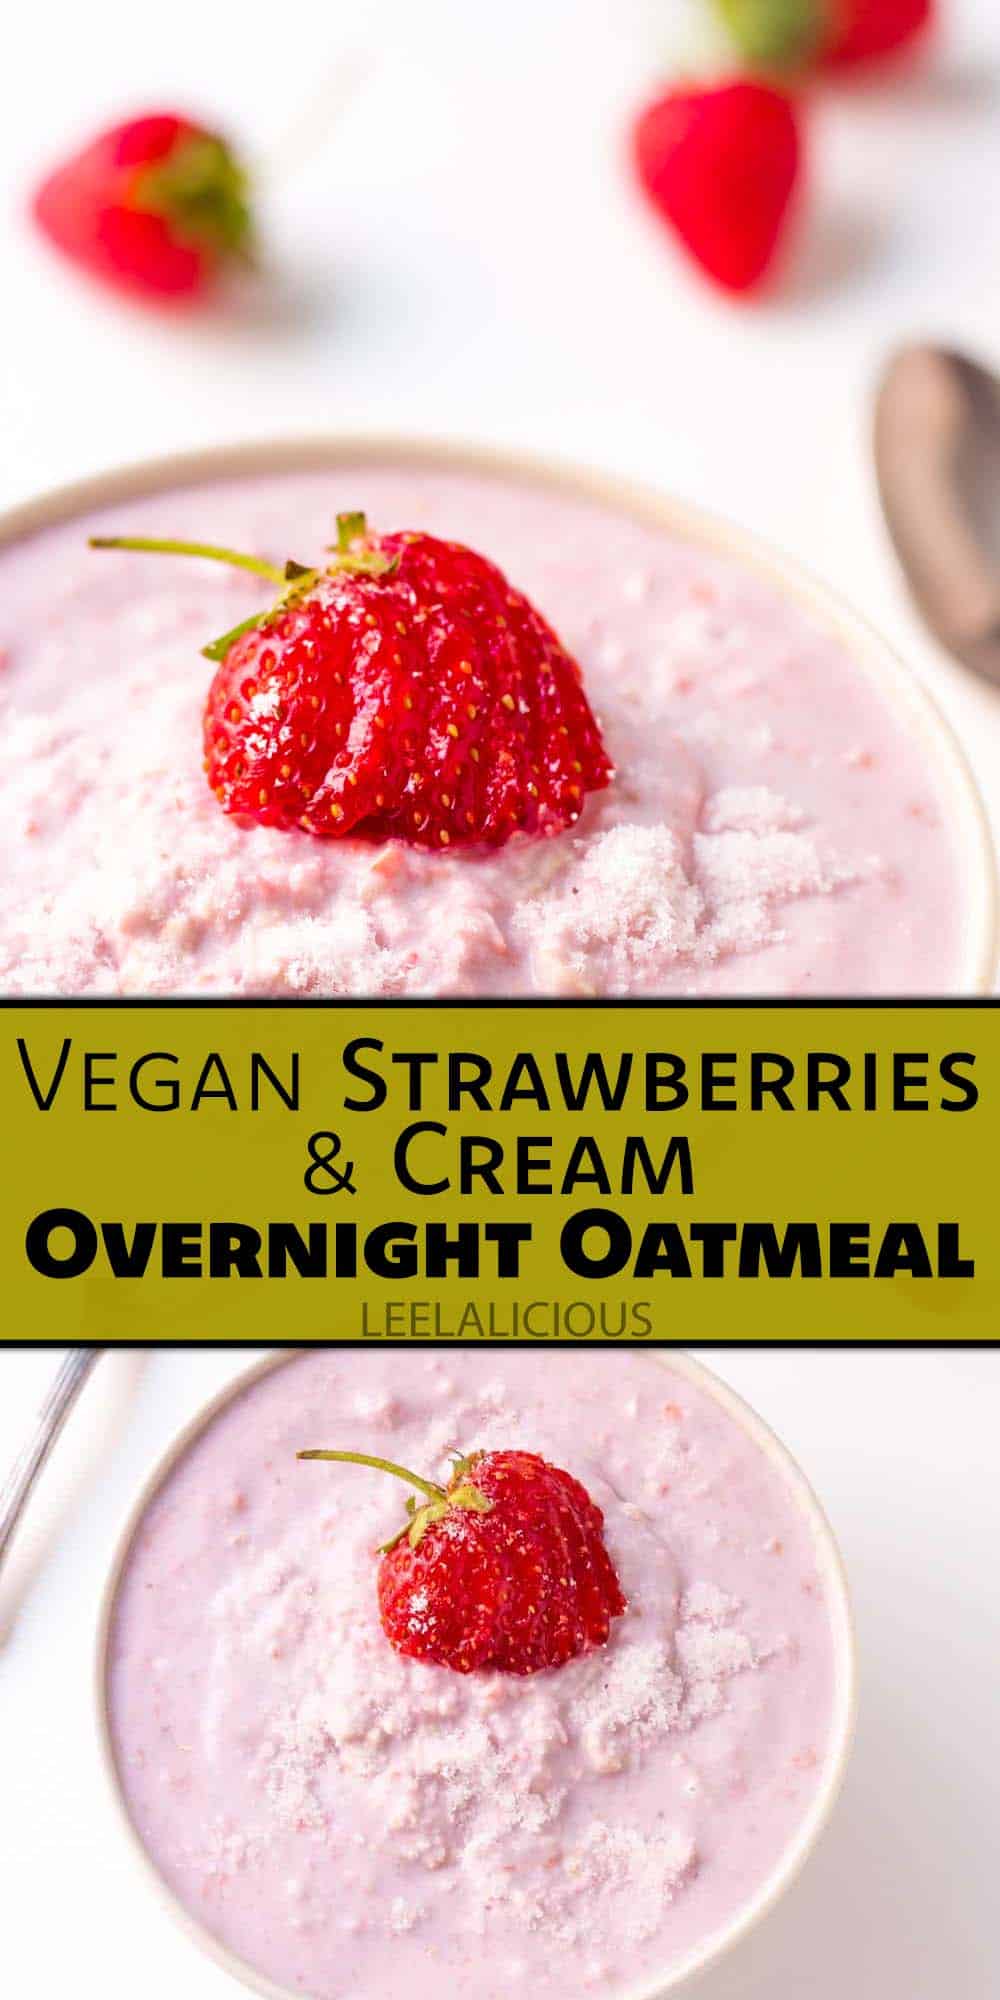 Vegan Strawberries and Cream Overnight Oatmeal